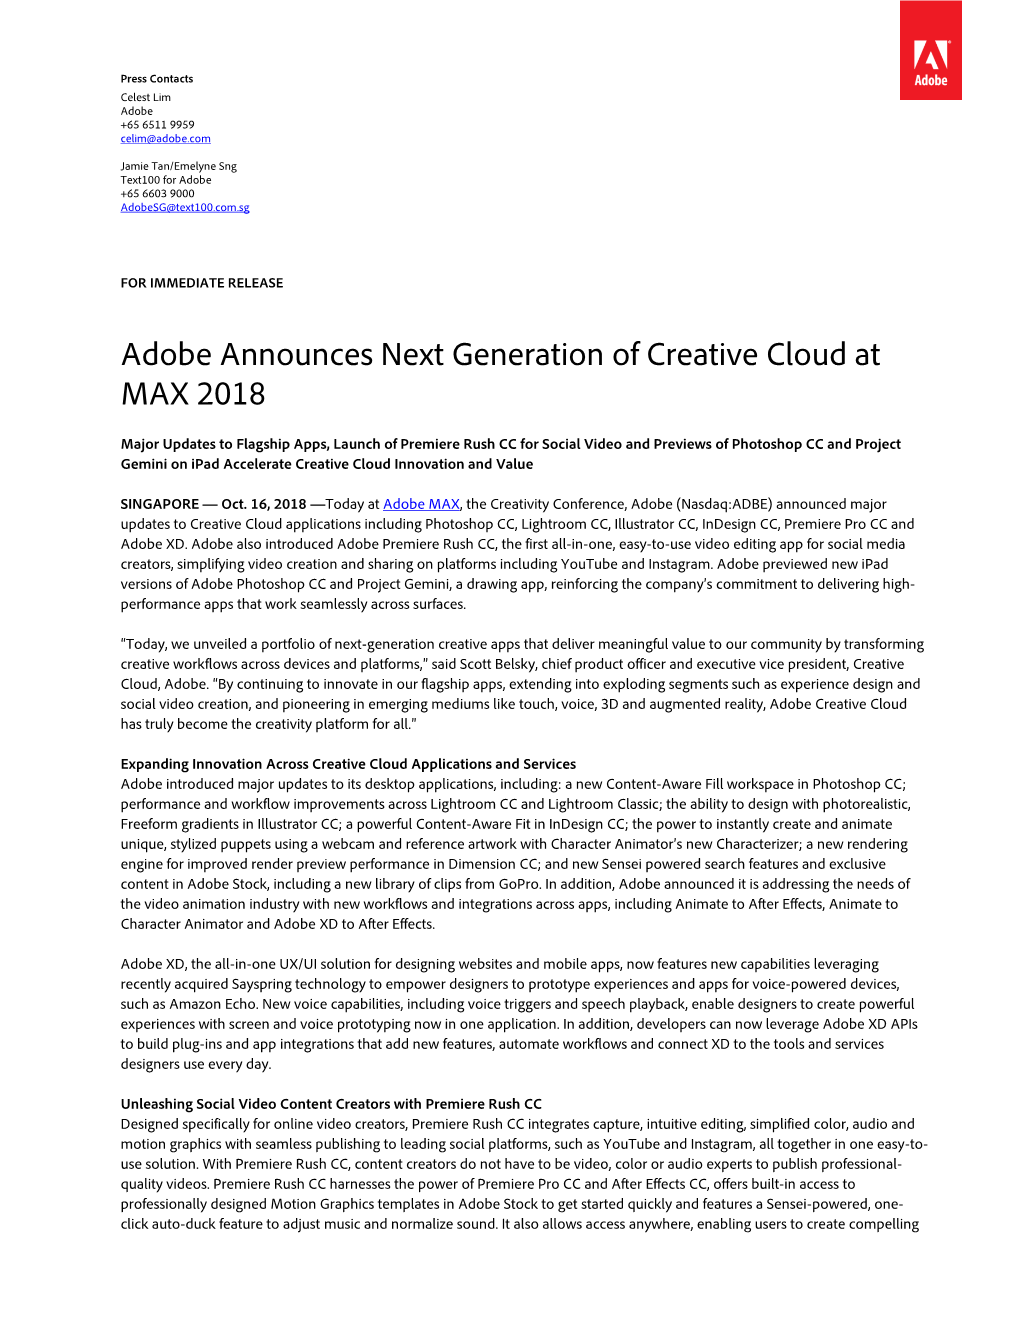 Adobe Announces Next Generation of Creative Cloud at MAX 2018